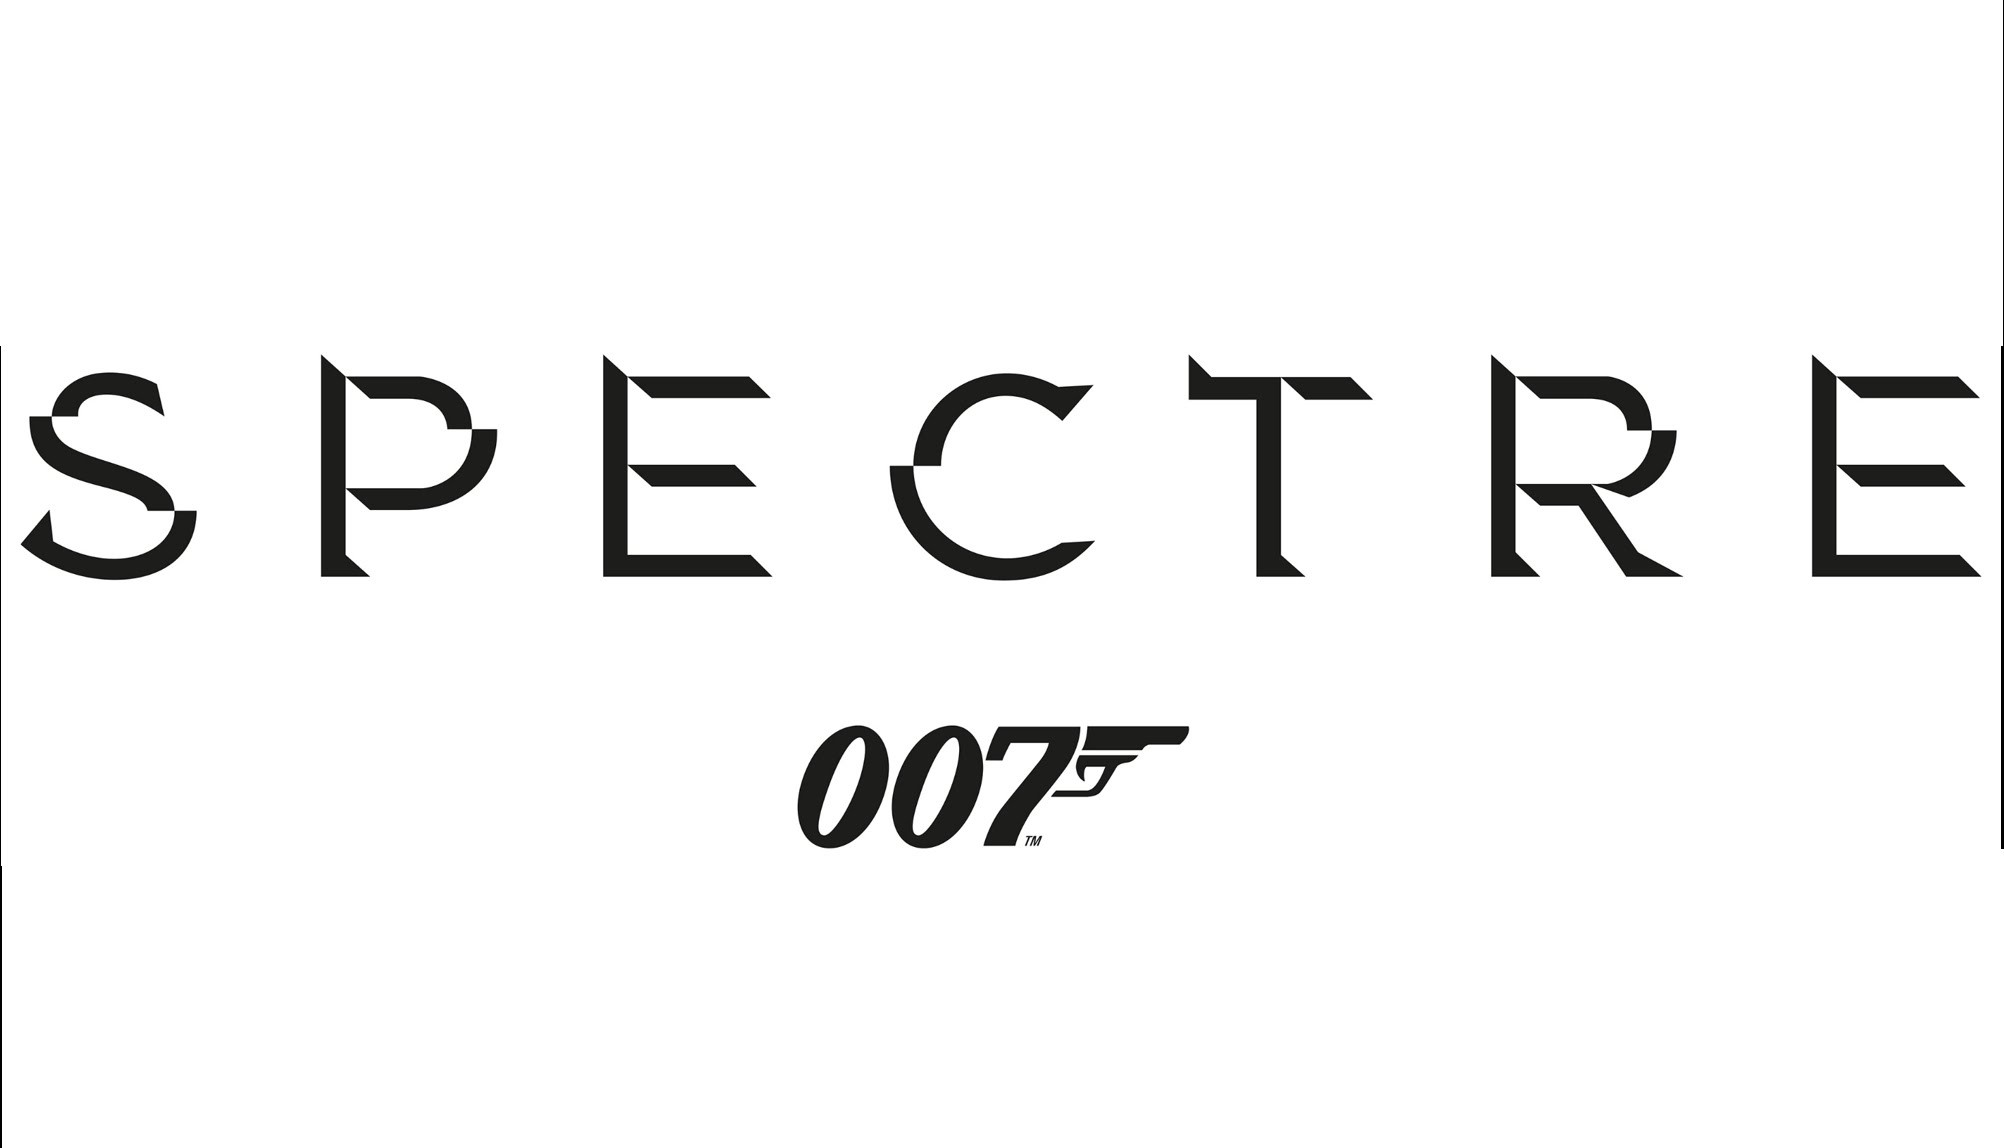 Spectre жанр. Спектр логотип 007. Spectre 007 Спрут. Спектр Бонд символ.